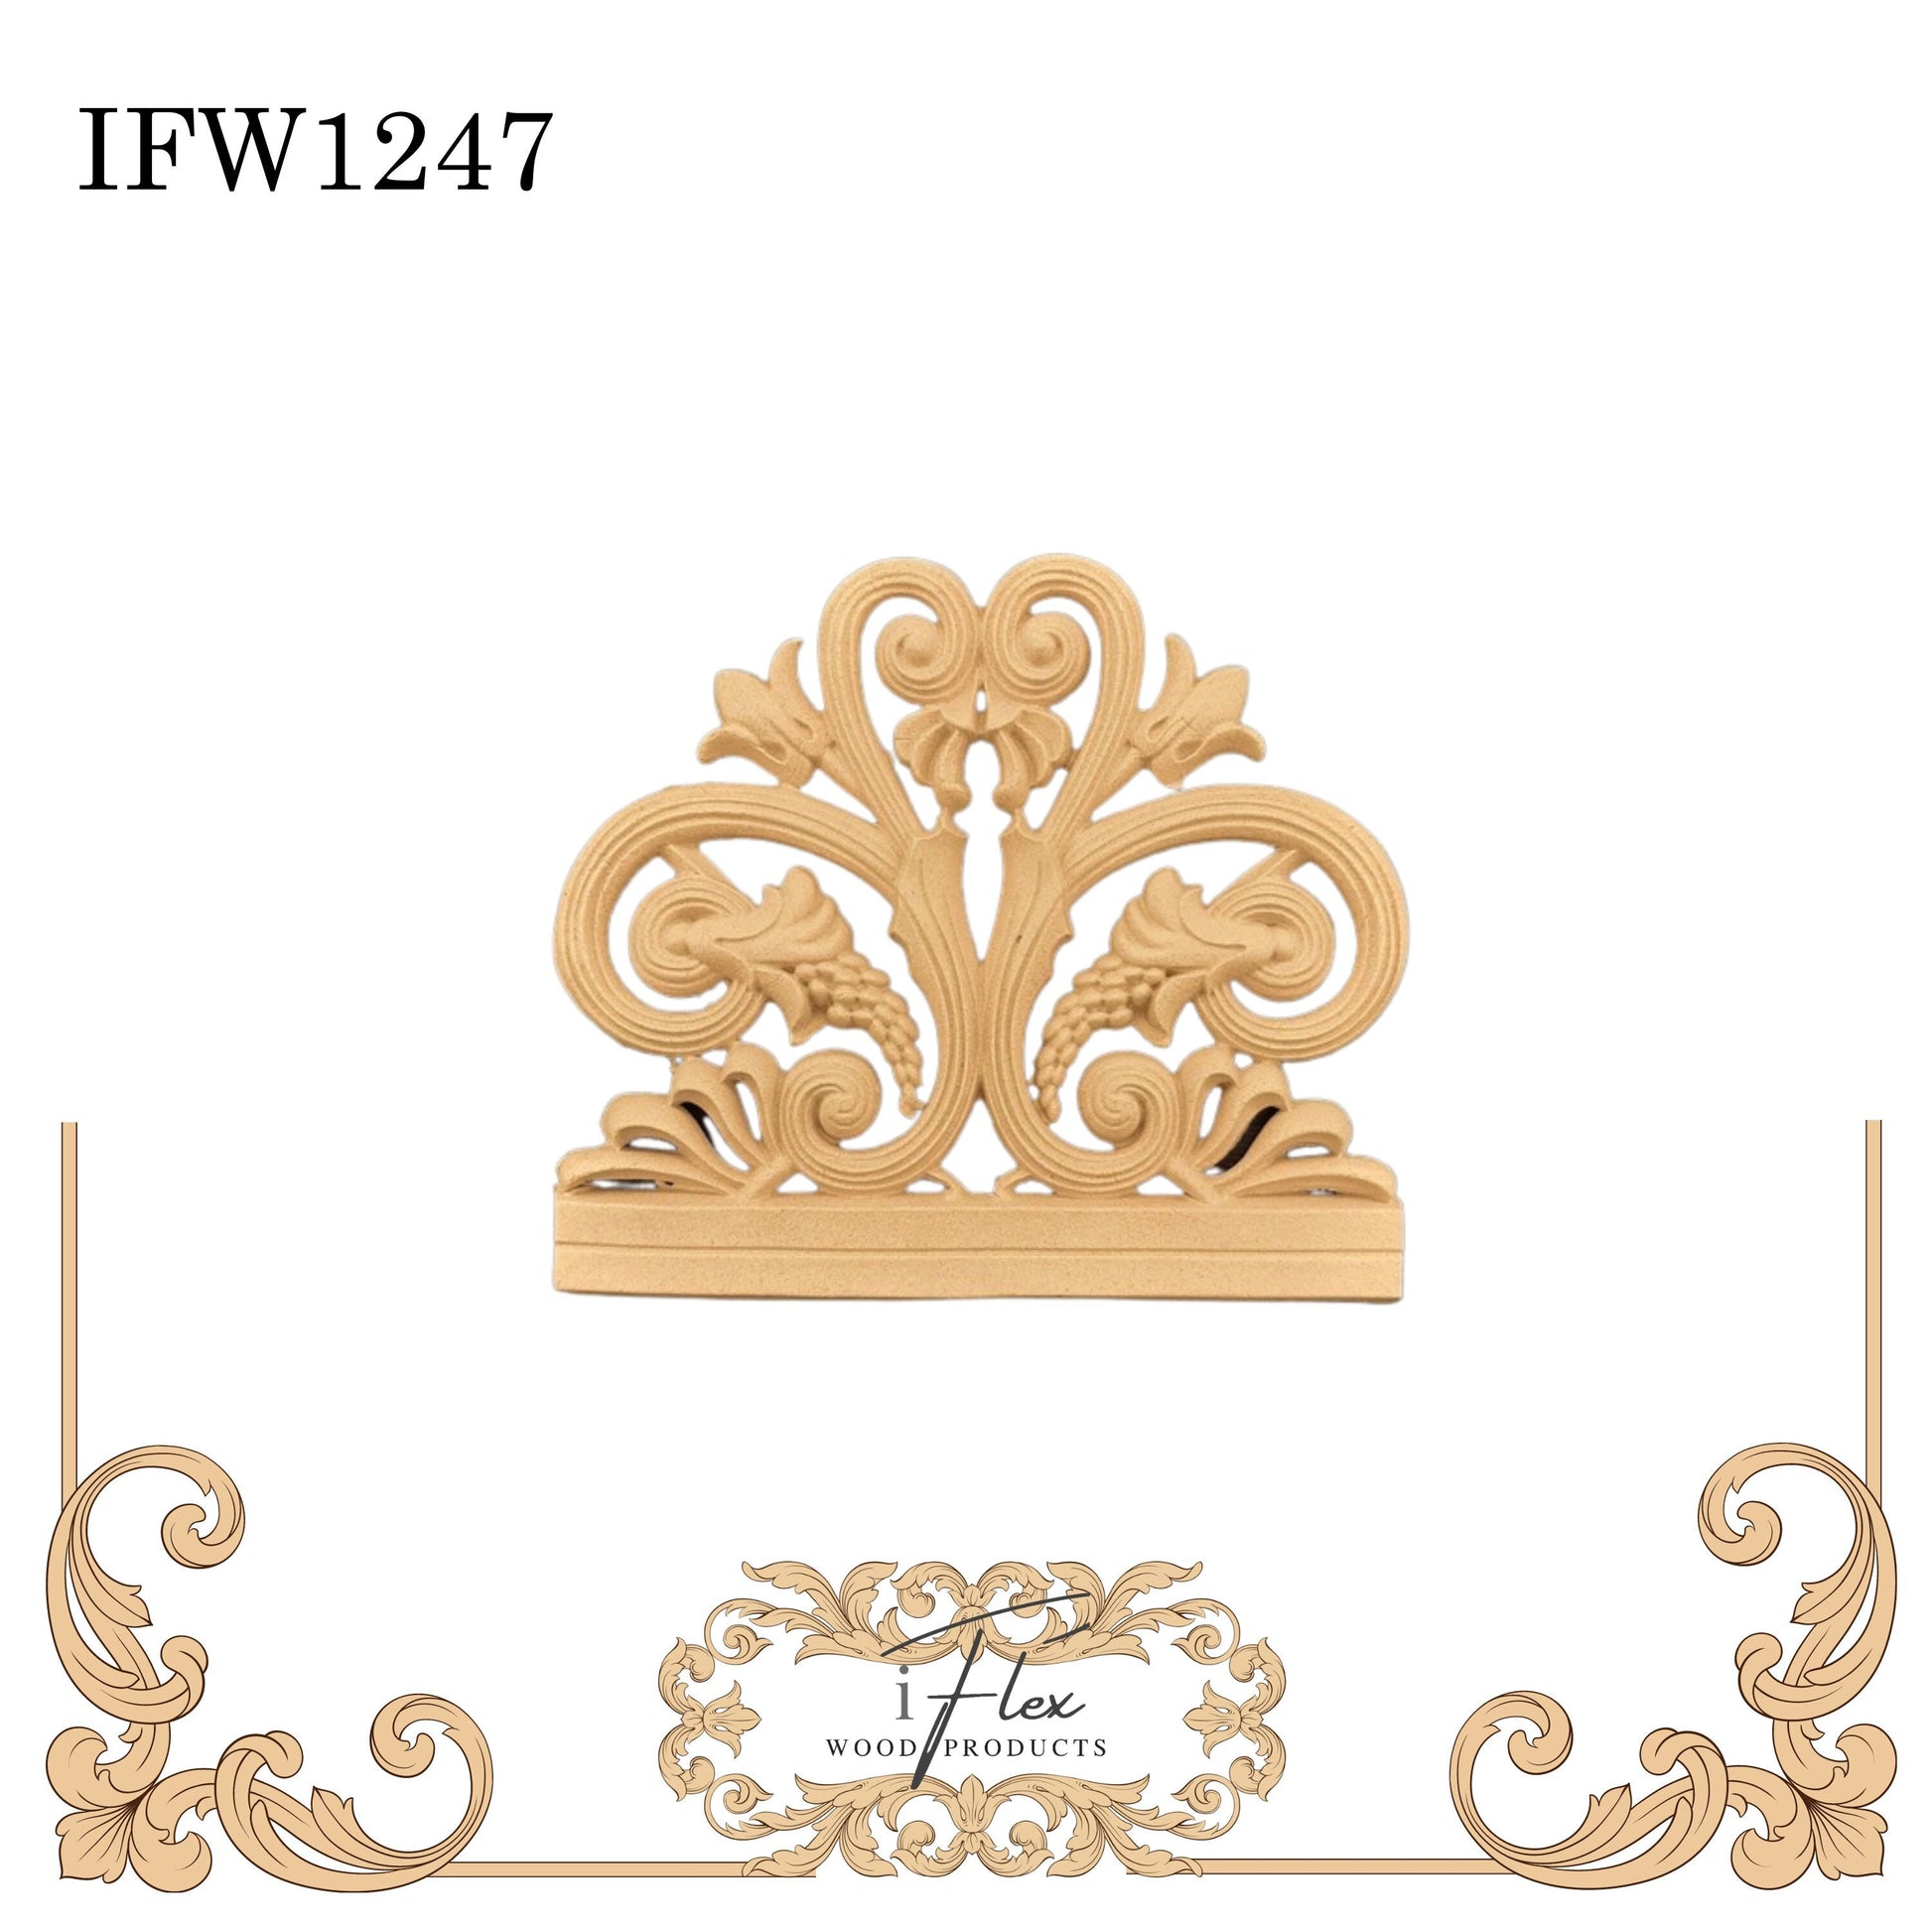 IFW 1247 iFlex Wood Products, bendable mouldings, flexible, wooden appliques, plaque, centerpiece